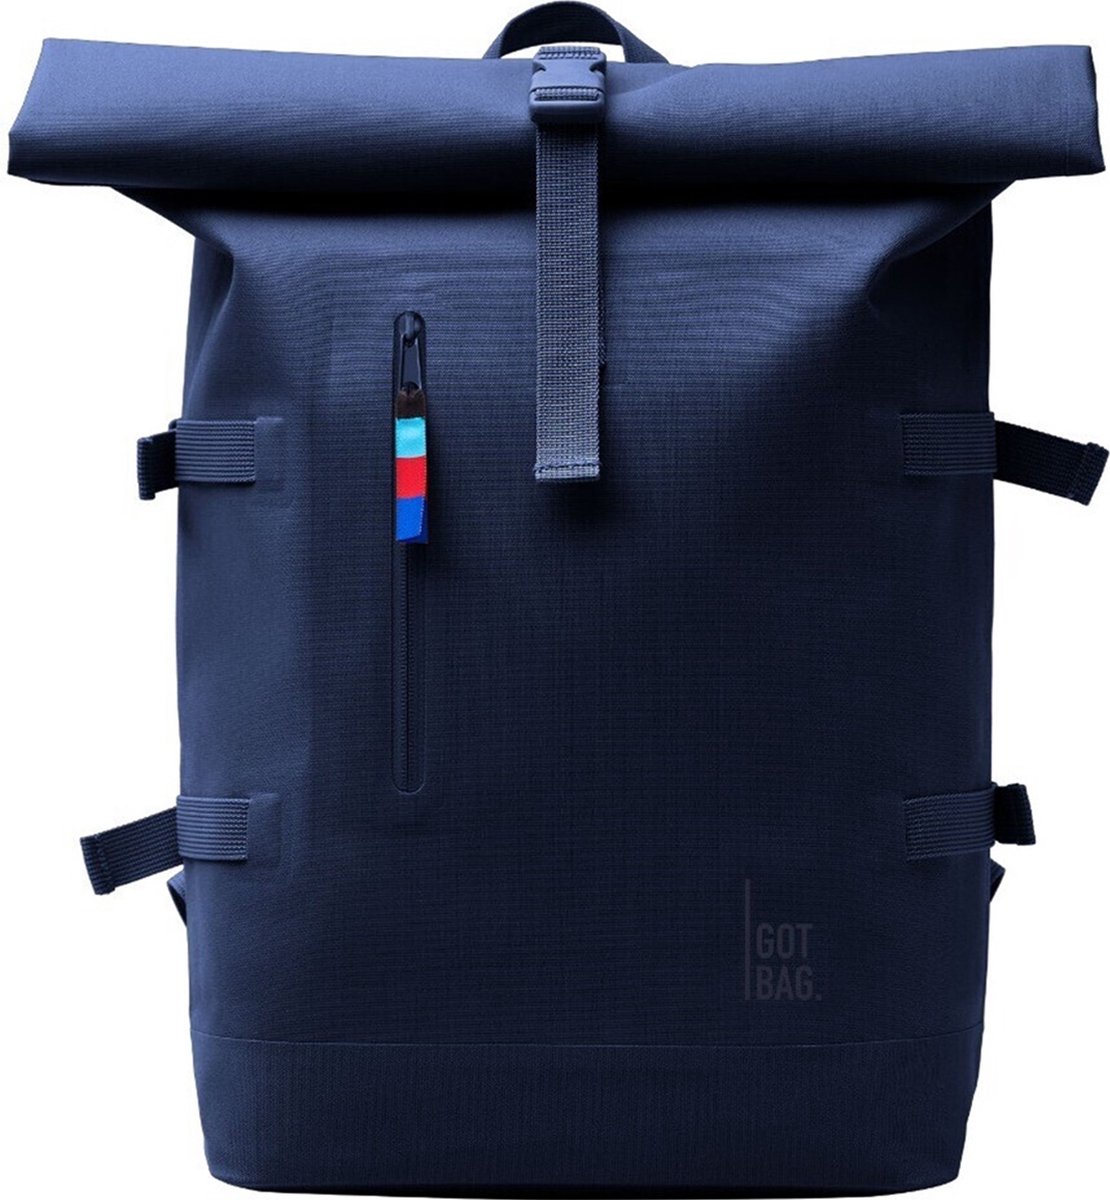 GOT BAG Laptop Rugzak / Rugtas / Laptoptas / Werktas - Rolltop - Blauw - 15 inch